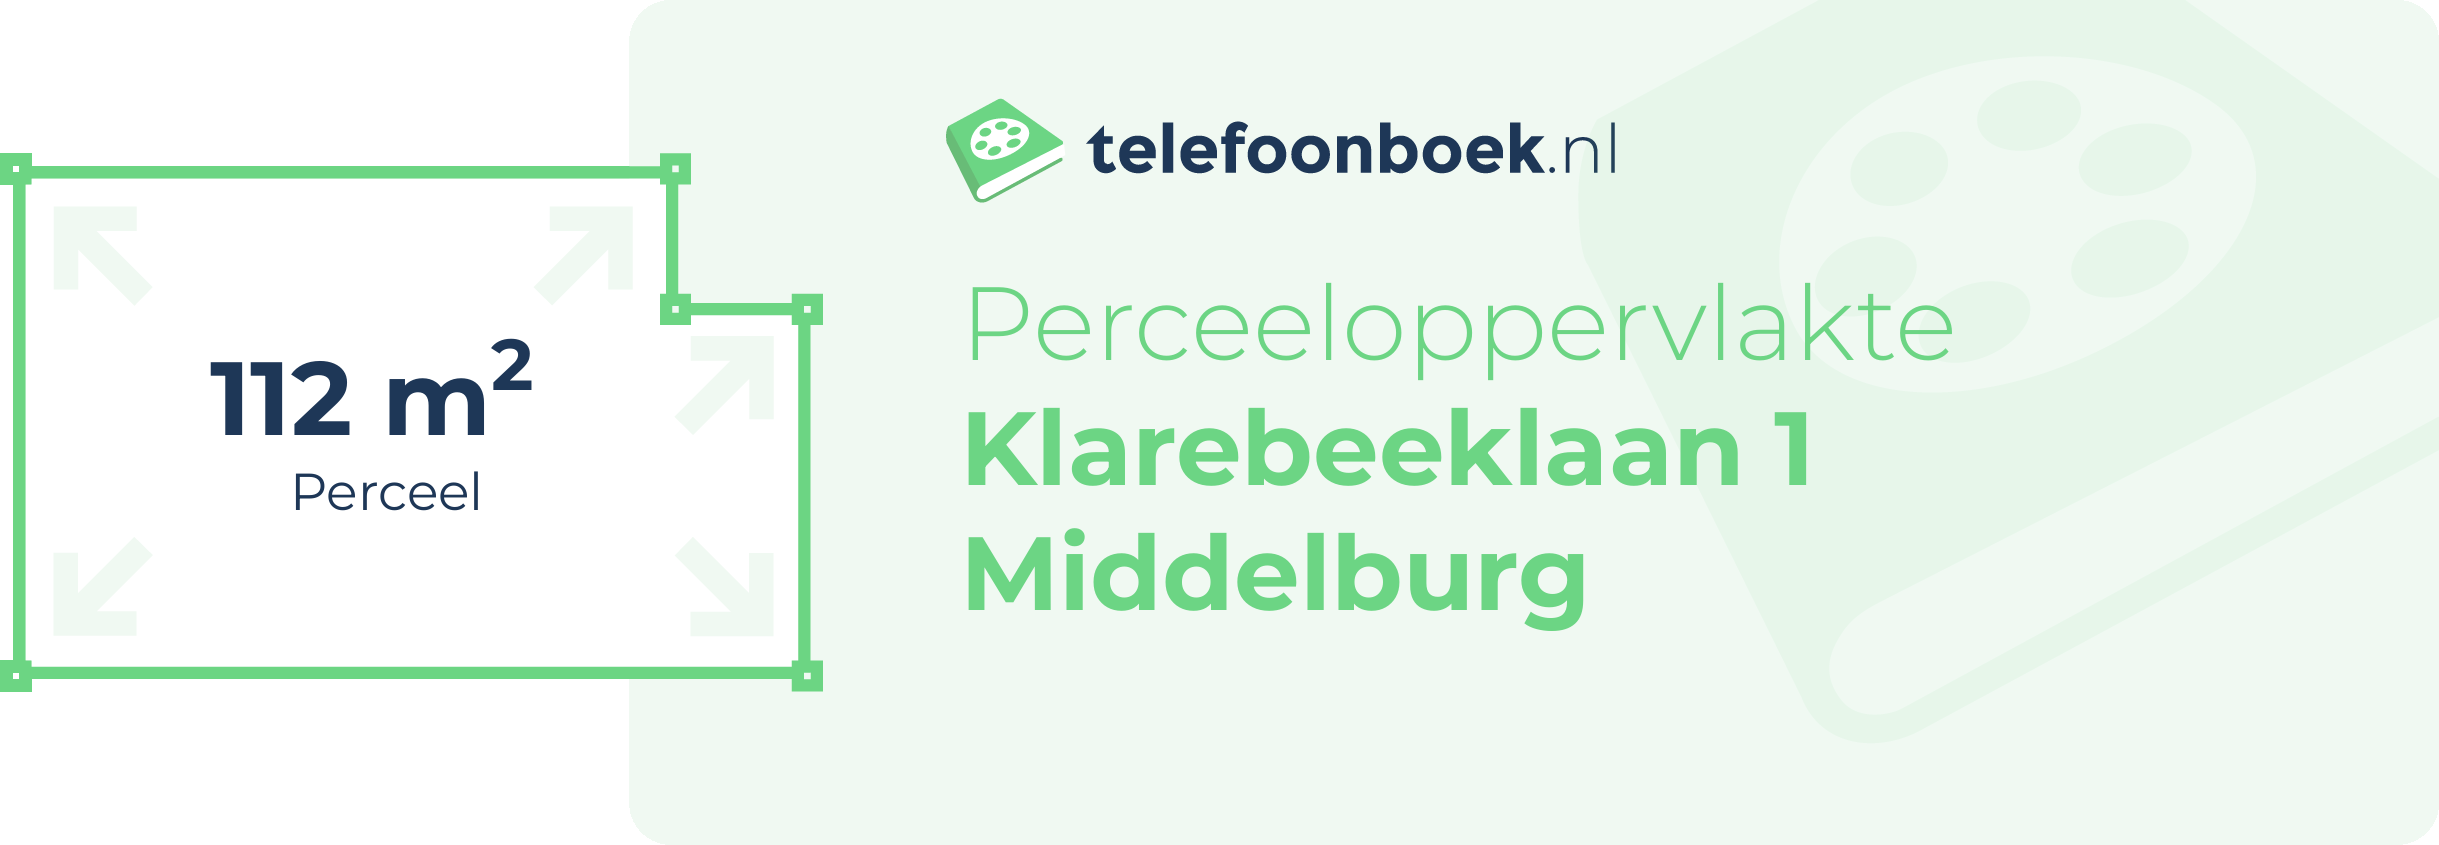 Perceeloppervlakte Klarebeeklaan 1 Middelburg